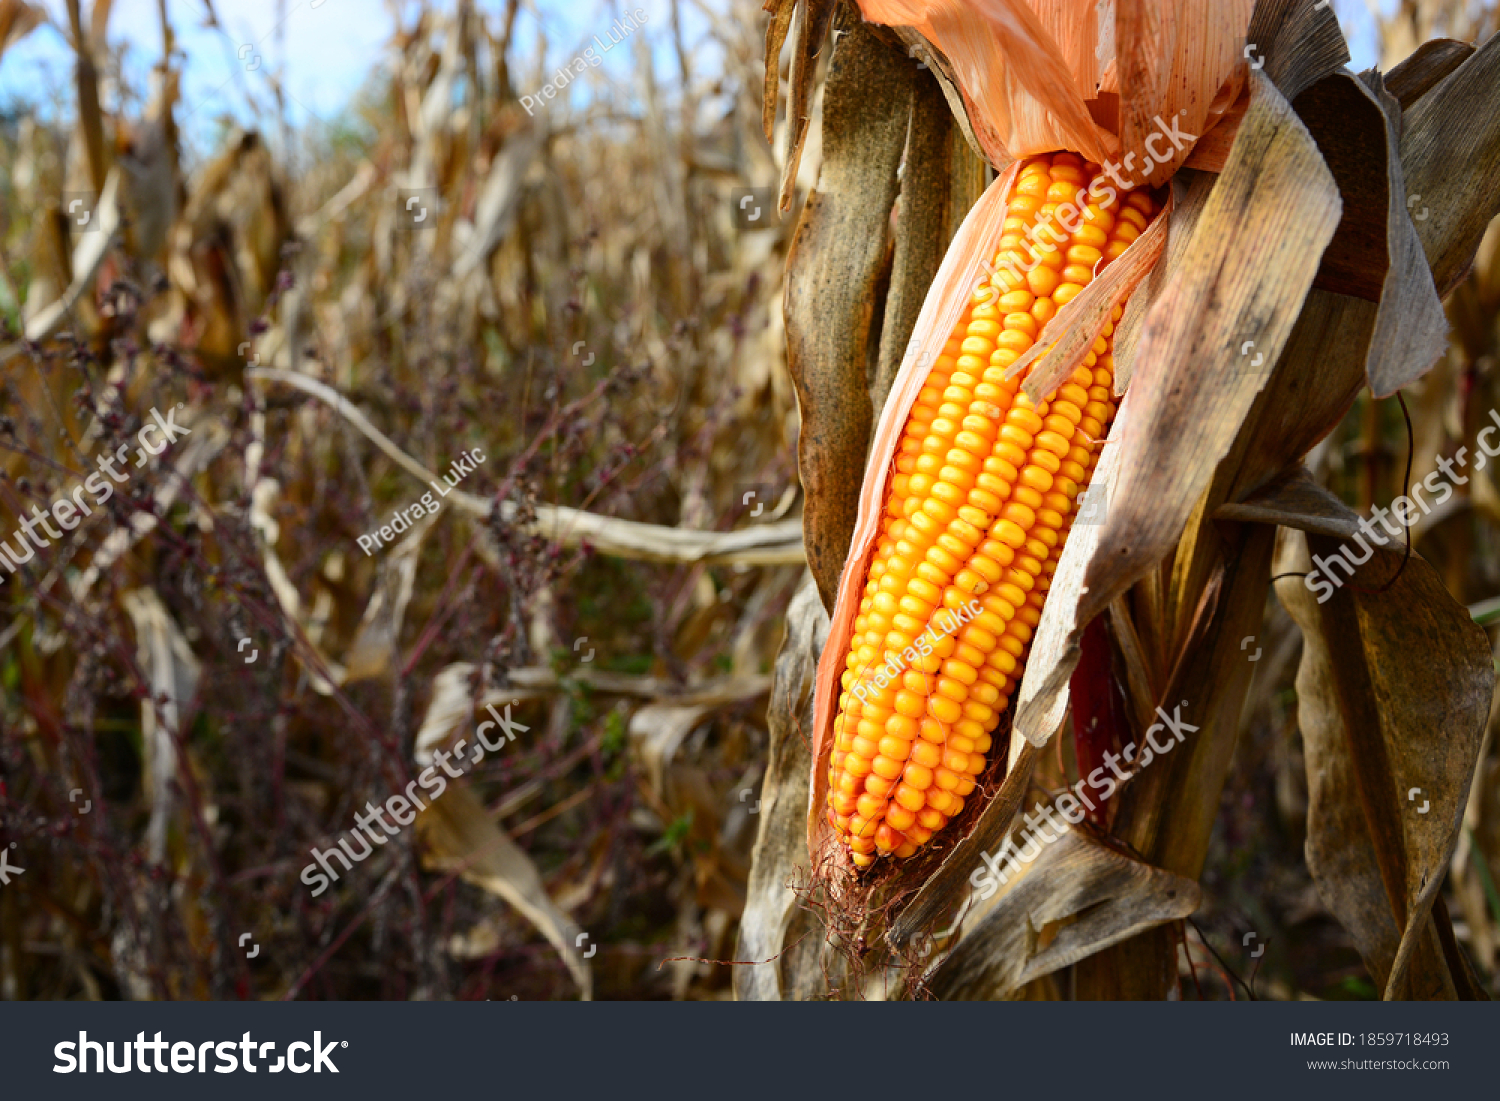 Closeup of dry corn cob ready for harvest. #1859718493